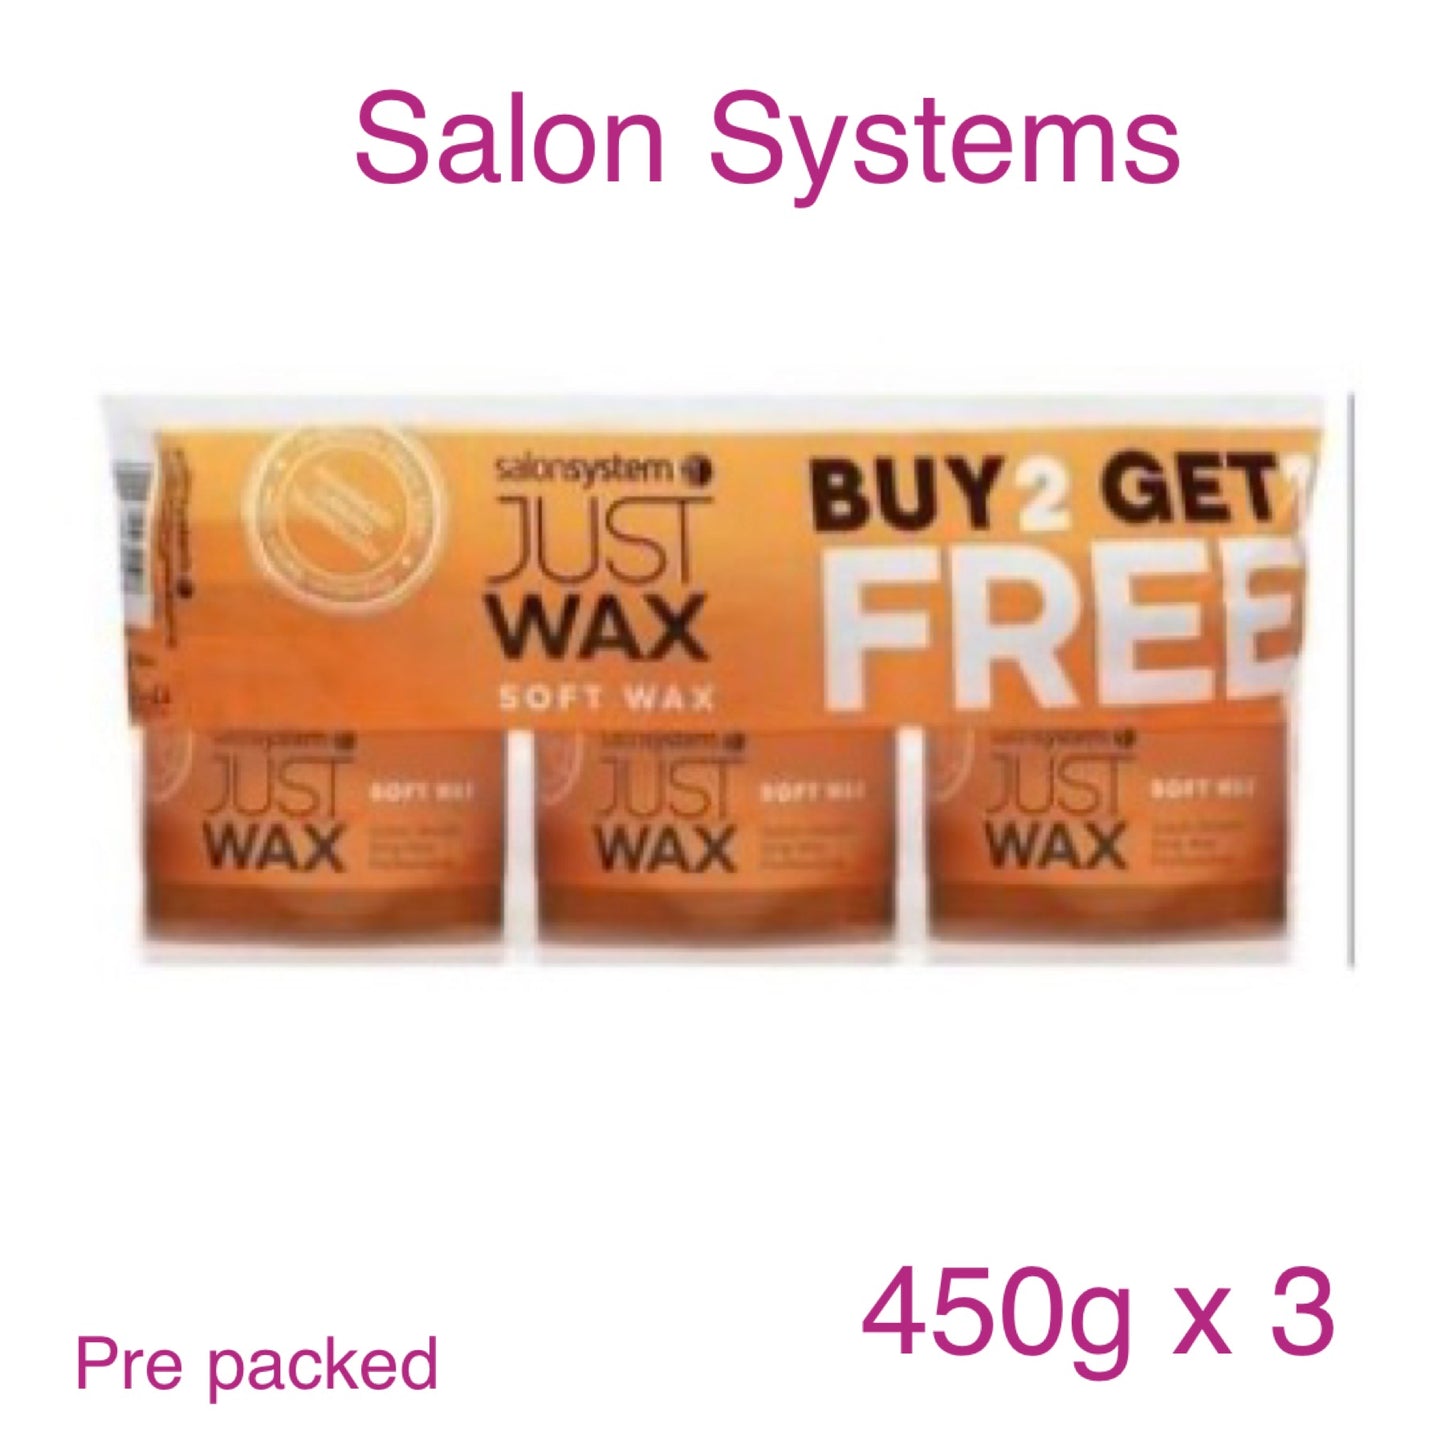 Salon Systems Just Wax Soft Wax (425g) Buy 2 get 1 Free